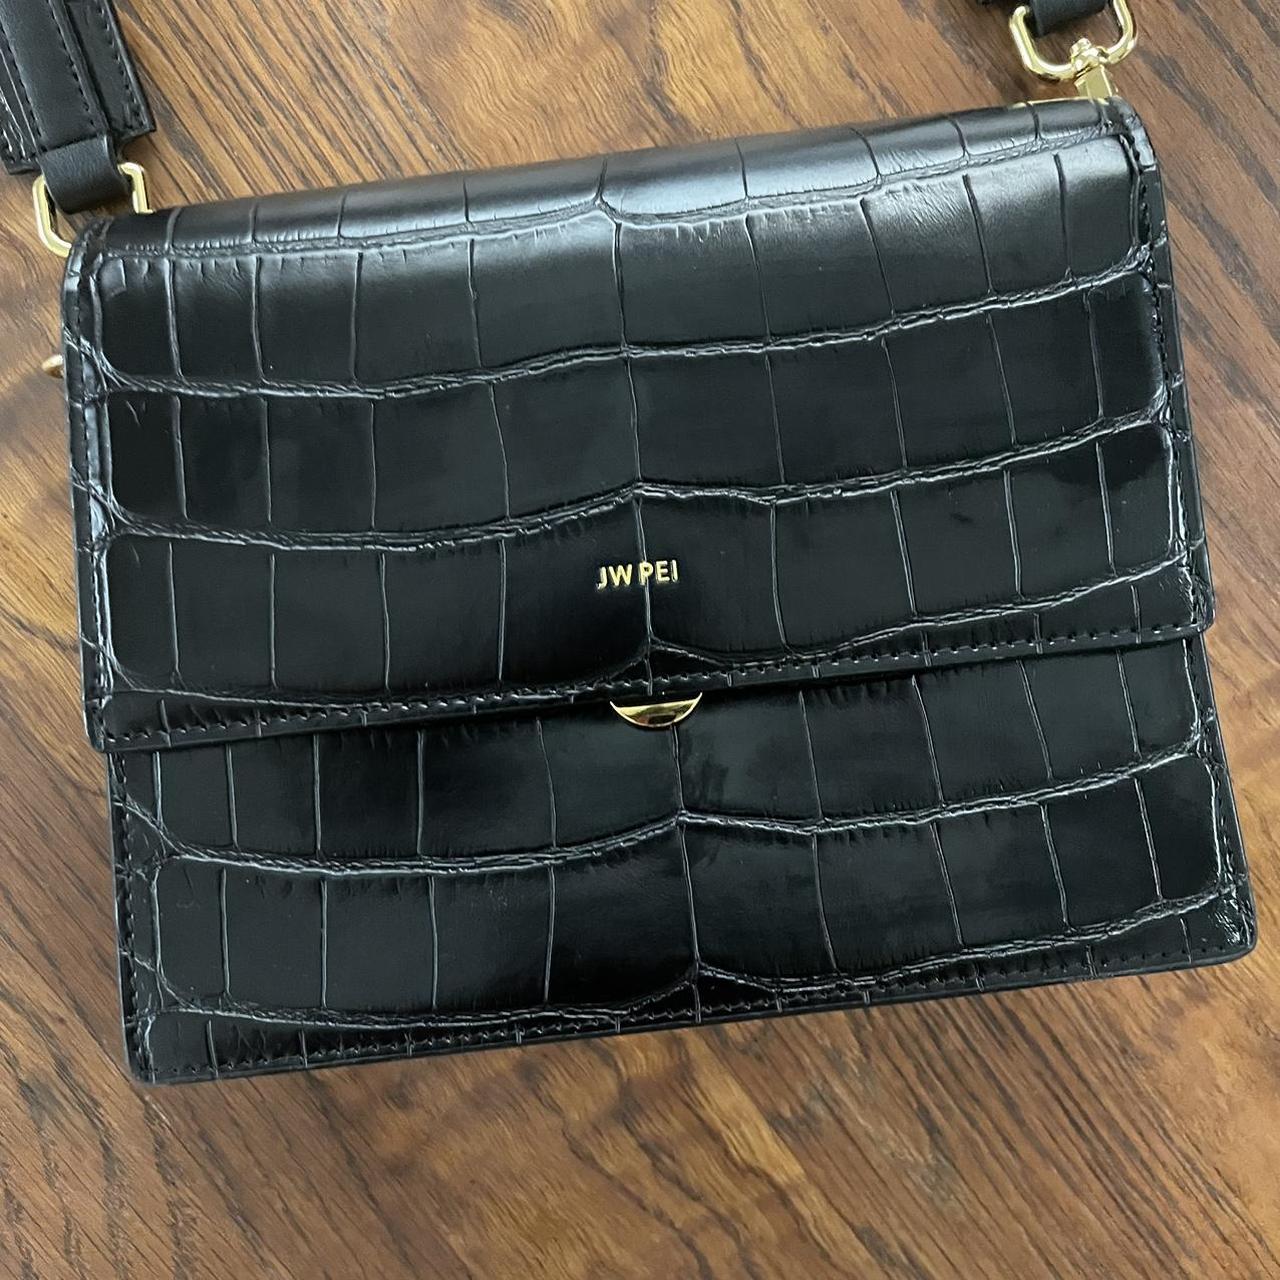 JW Pei mini flap crossbody purse in brown croc vegan - Depop